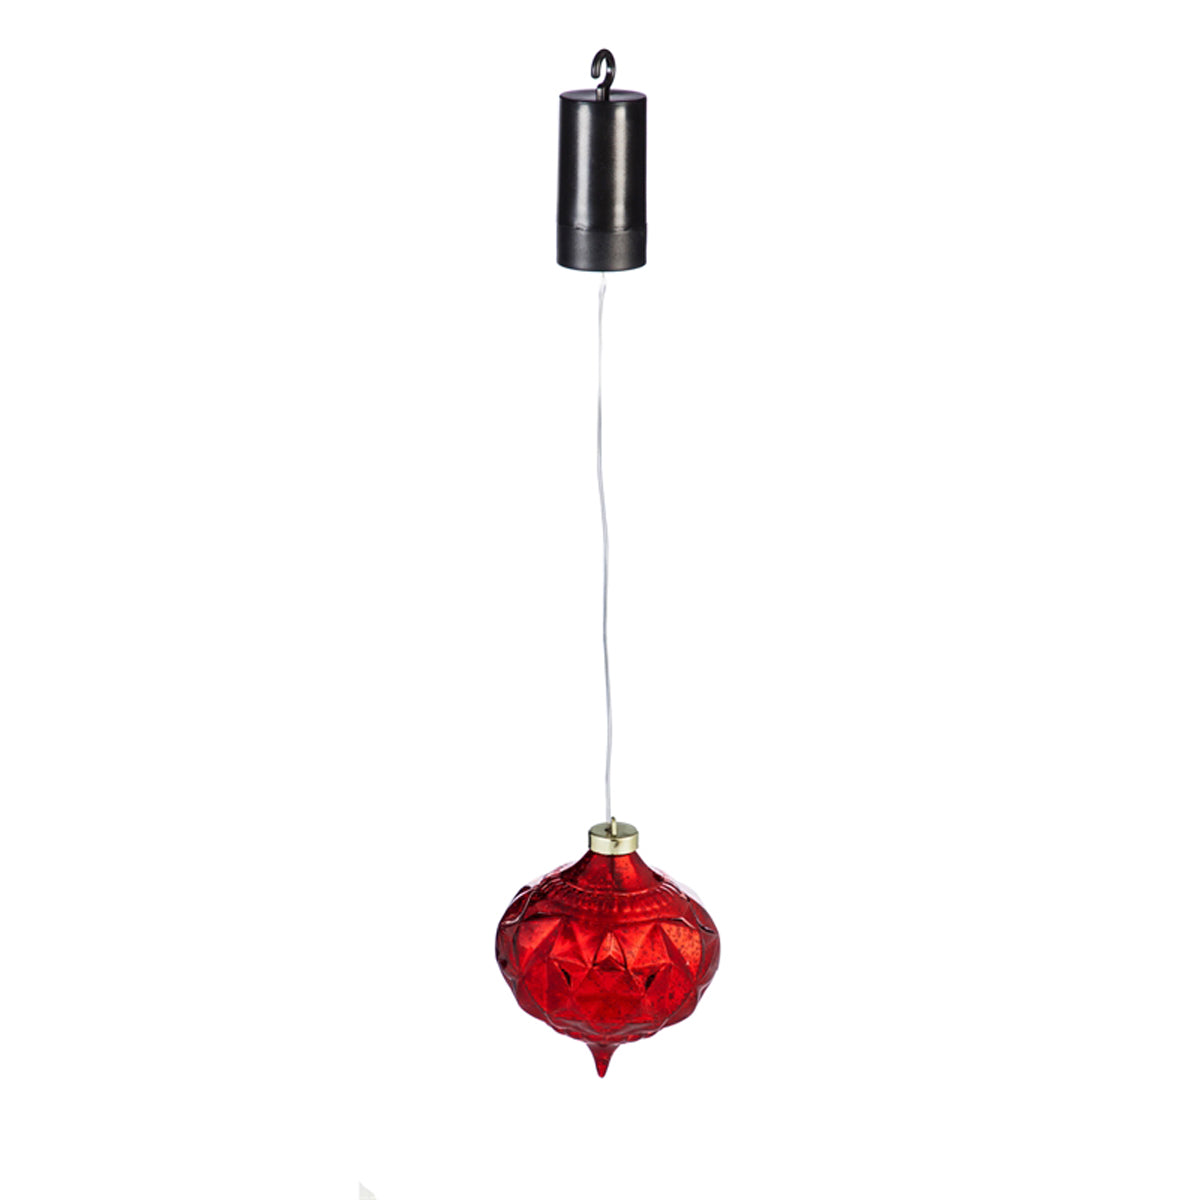 5" Shatterproof Outdoor LED Ornament